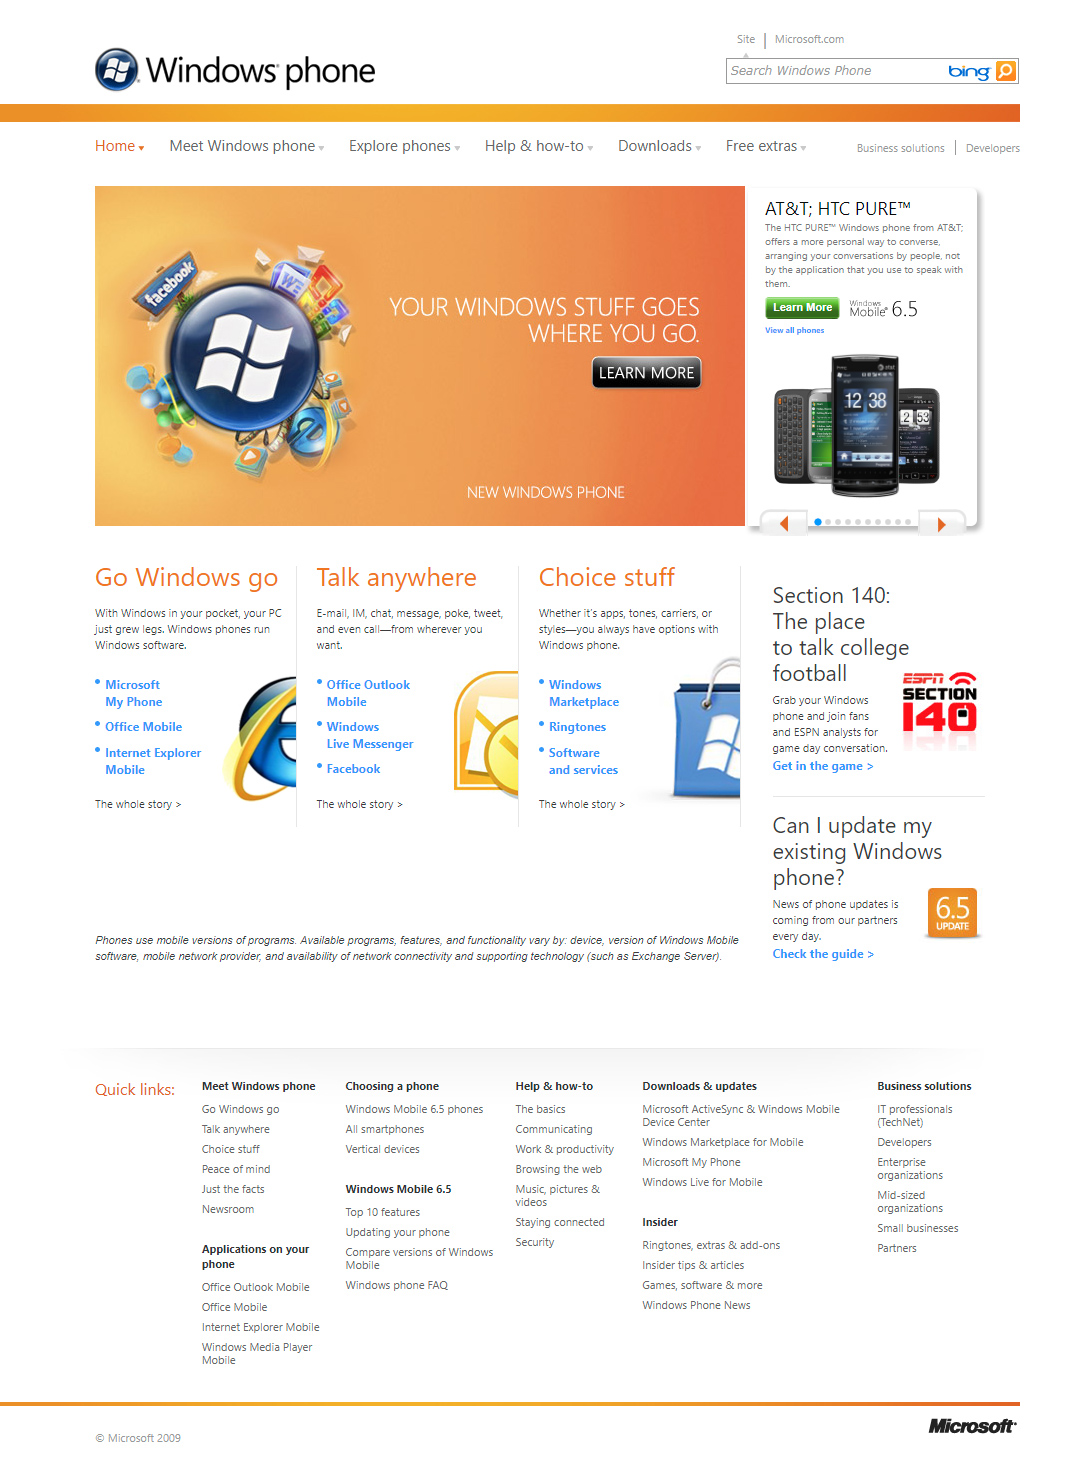 Windows Phone website in 2009